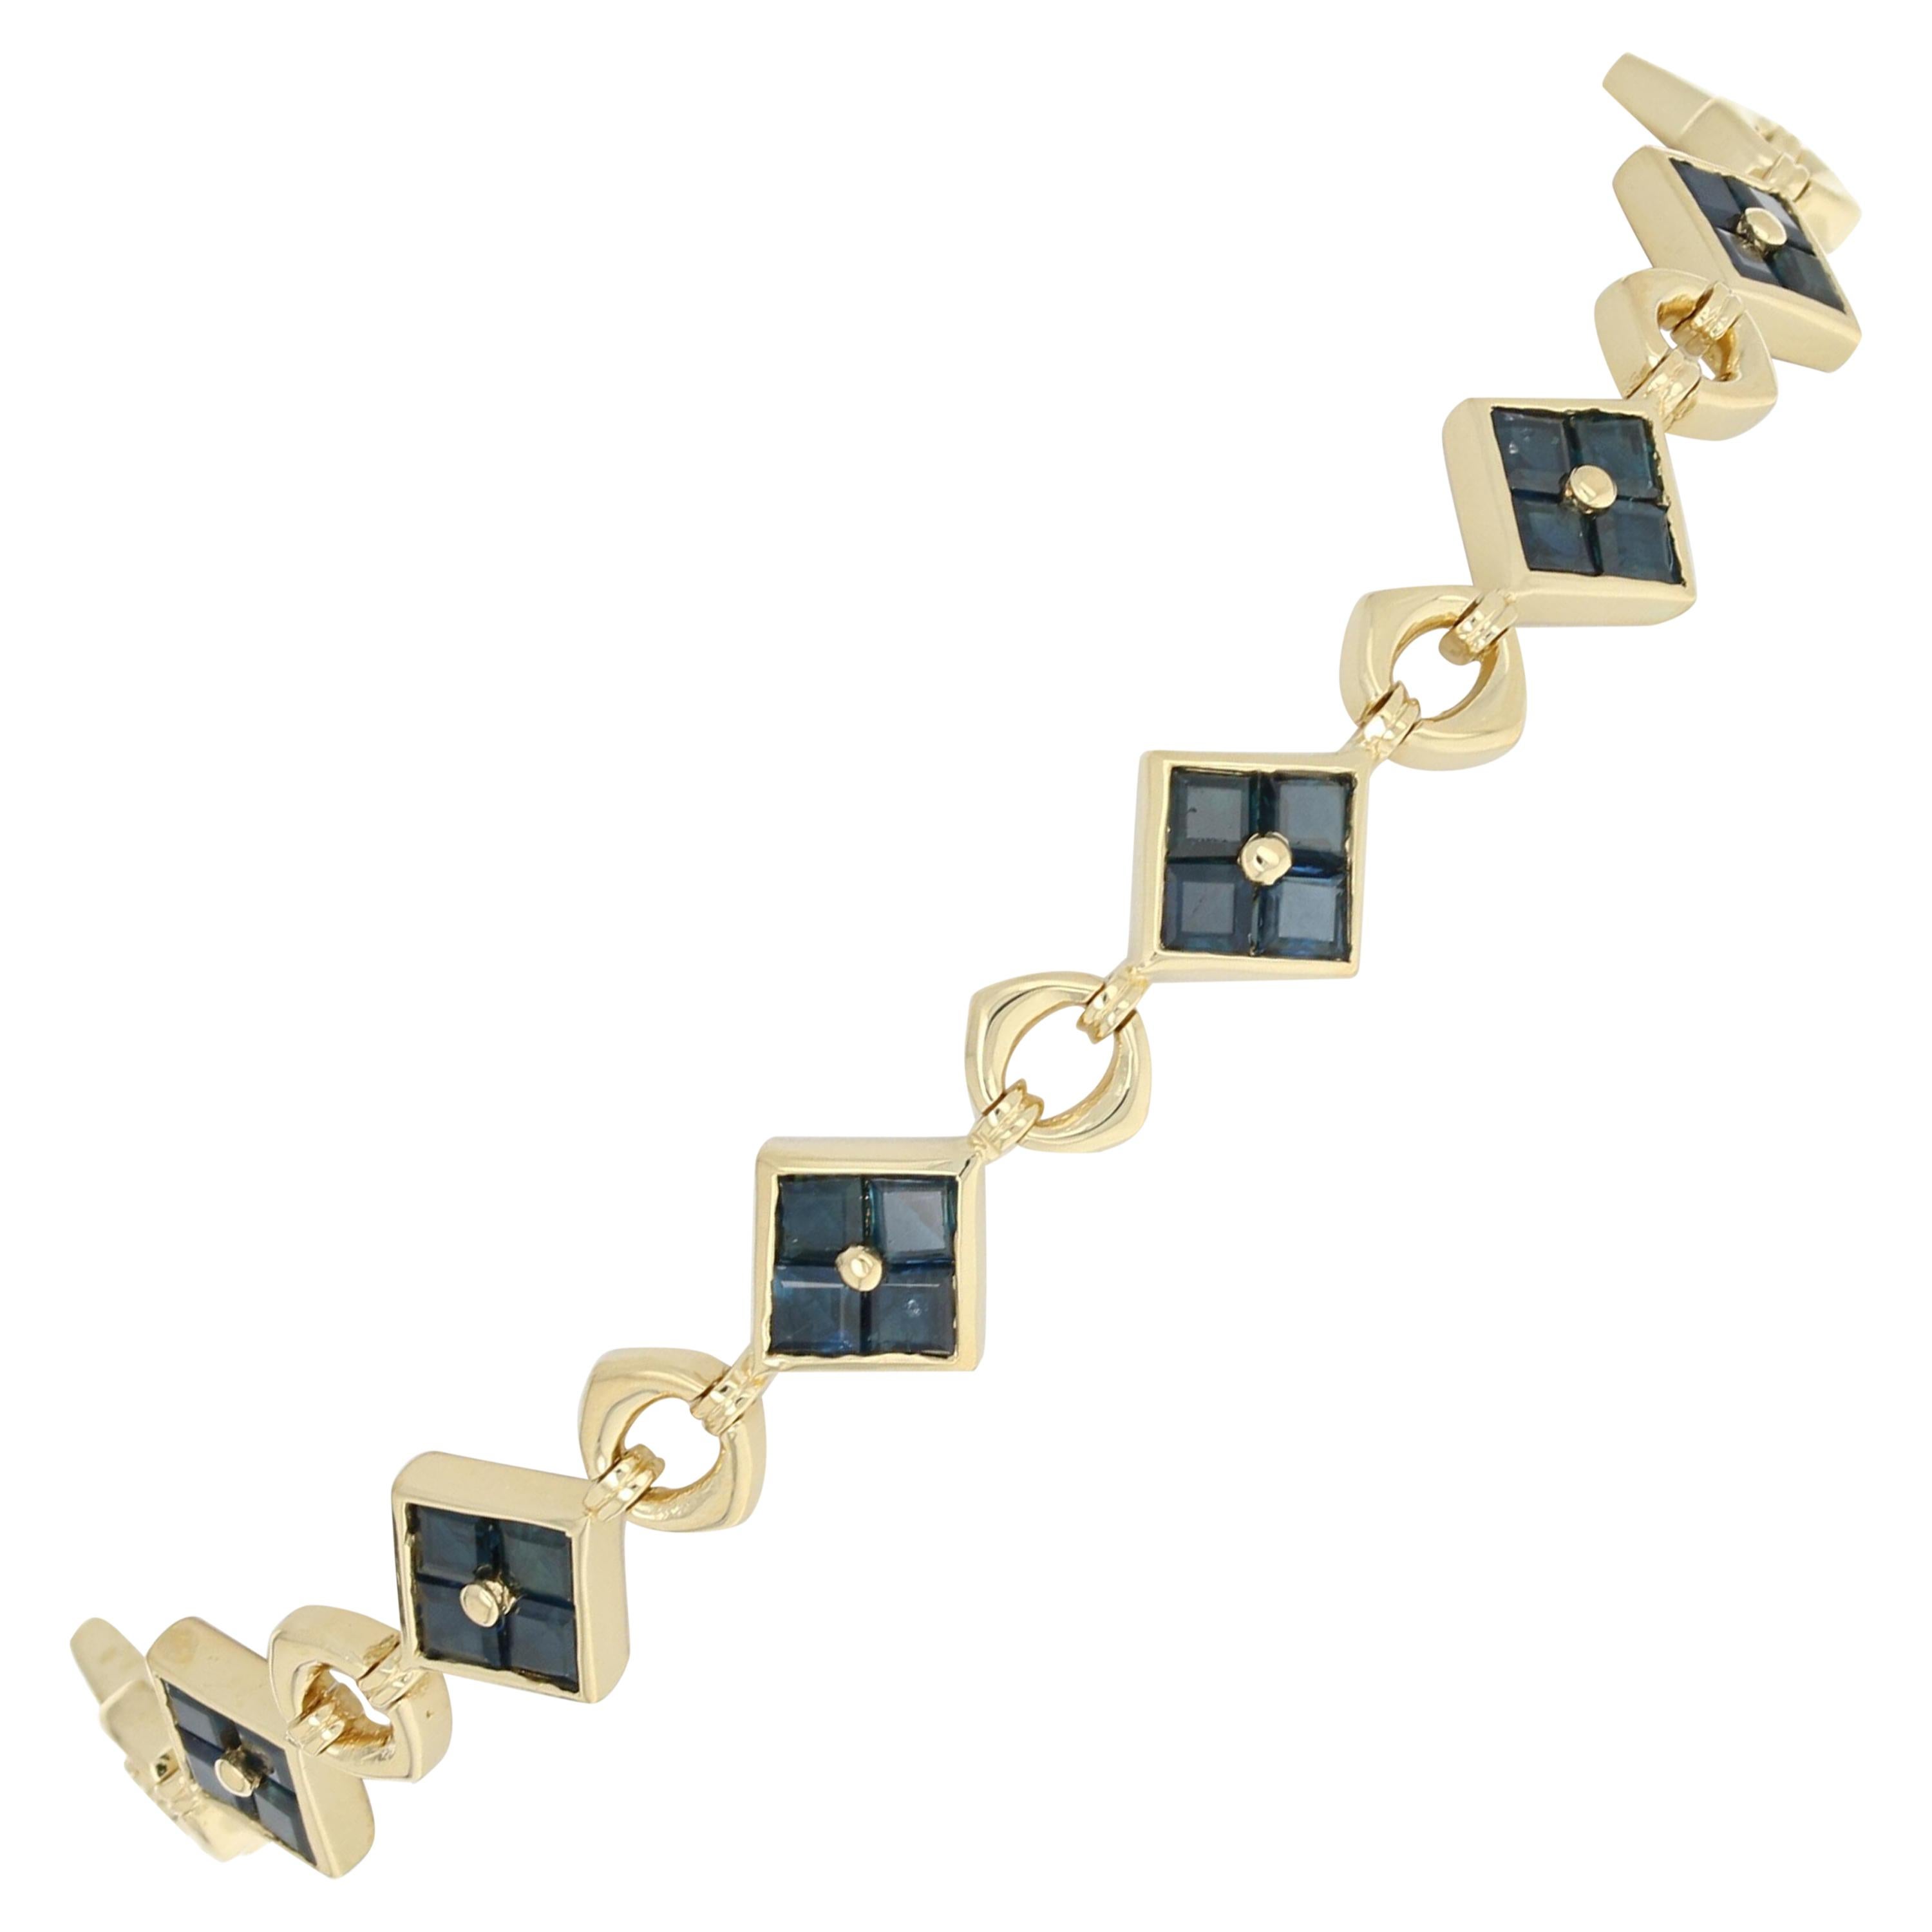 4.33 Carat Square Cut Sapphire Bracelet, 18 Karat Yellow Gold Link